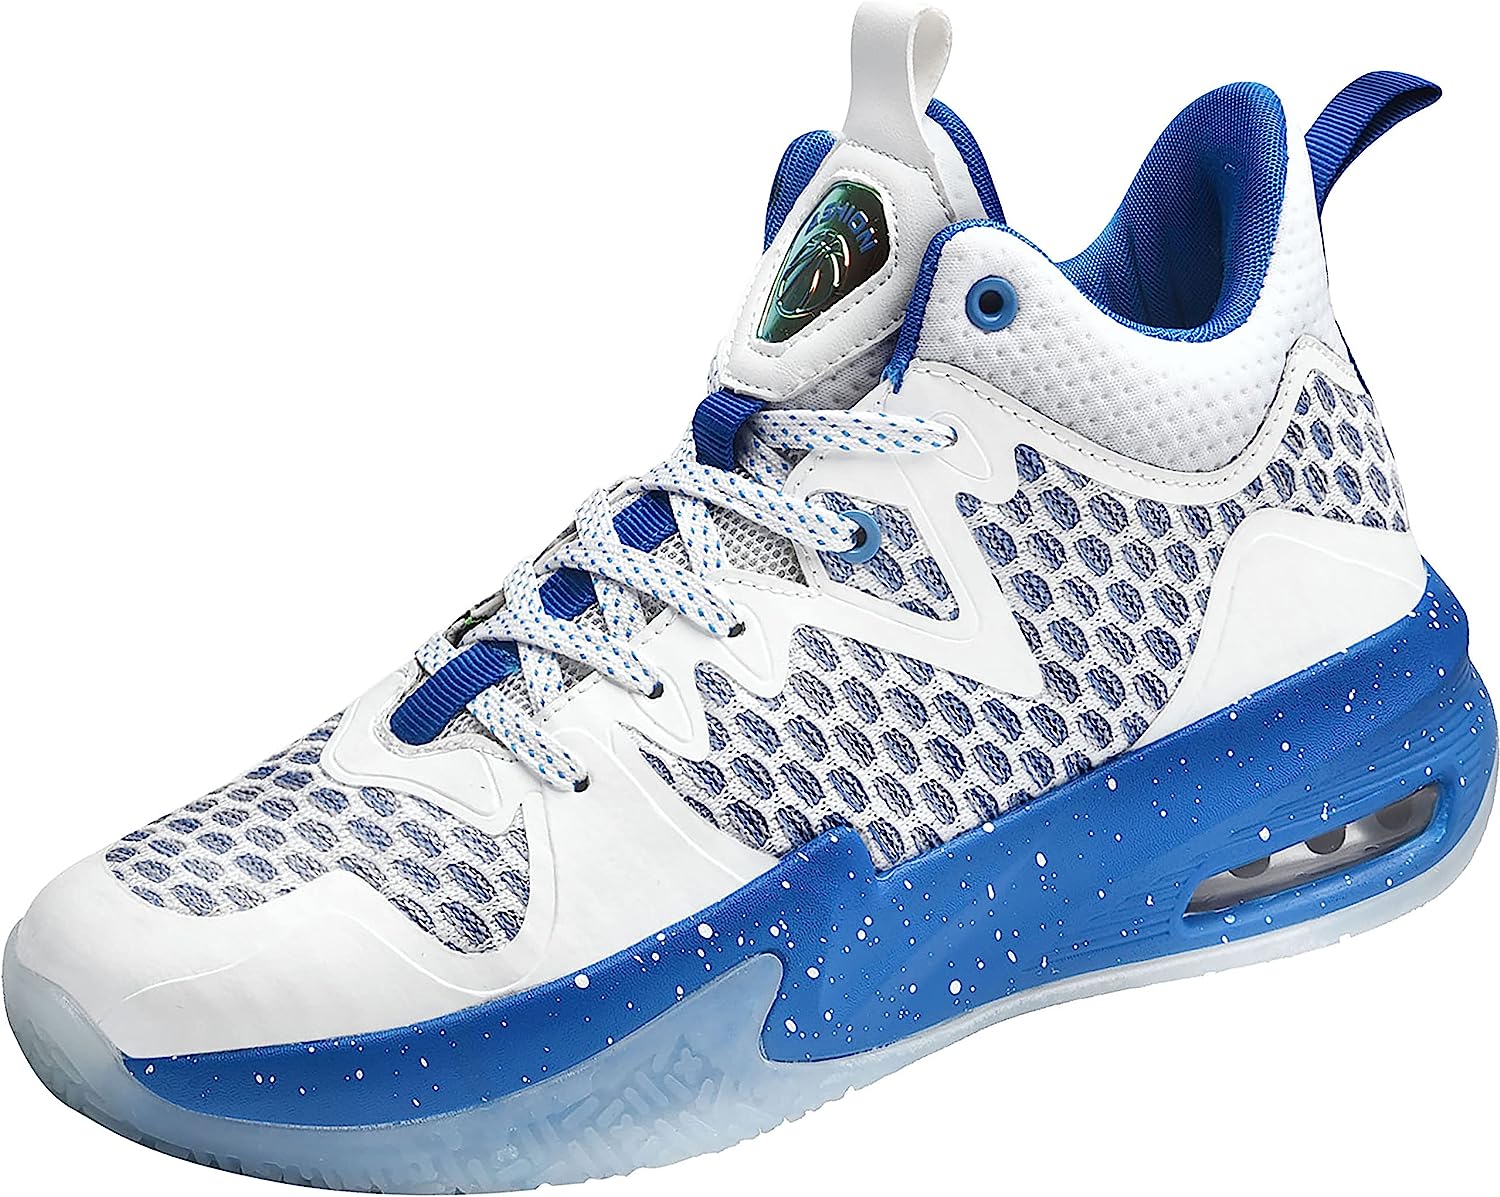 ASHION Men's Basketball Shoes Mid Basketball Sneakers [...]